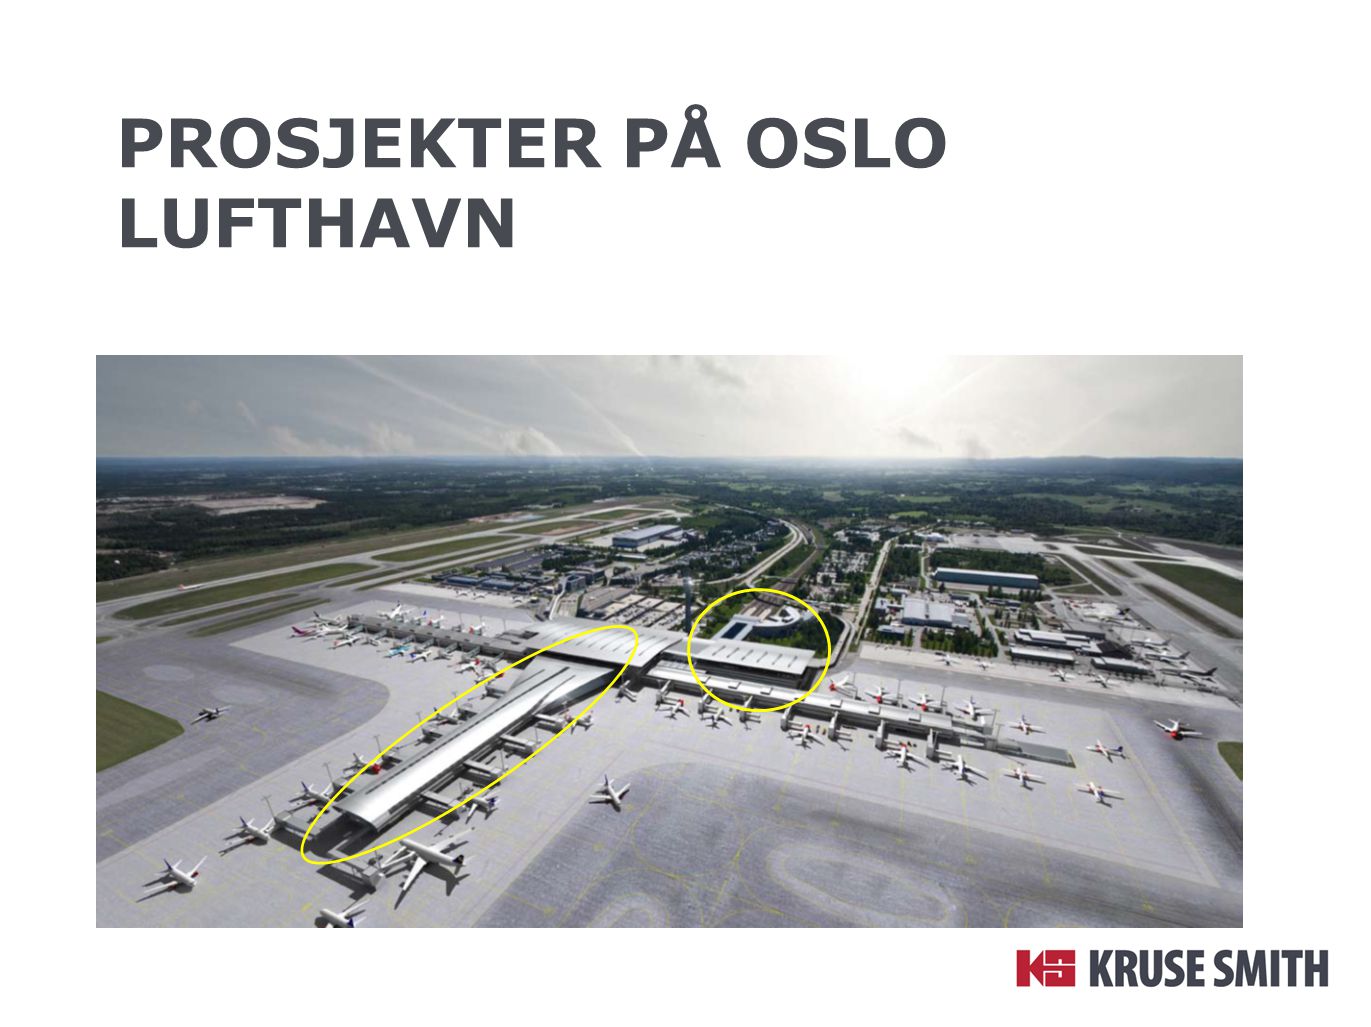 Prosjekter på OSLo lufthavn